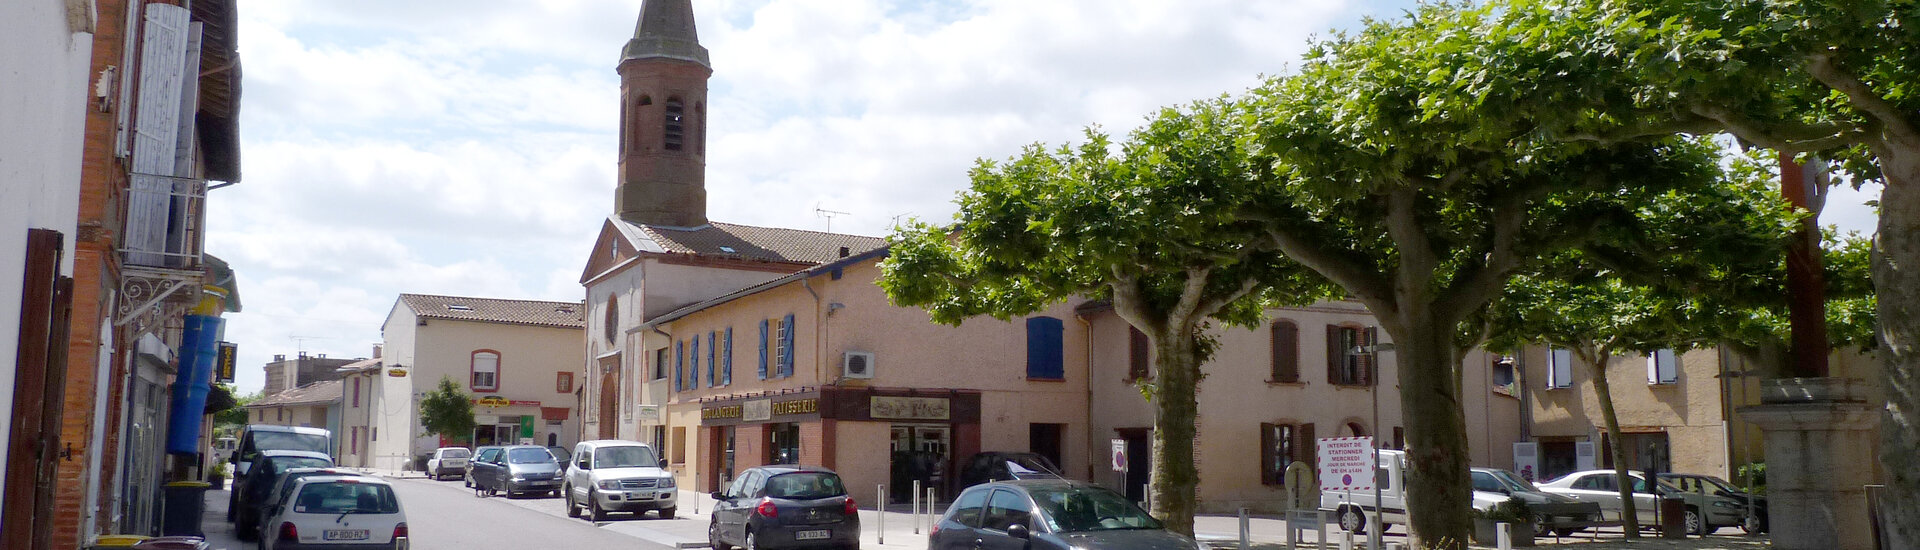 Marché Services Mairie Albias Tarn-et-Garonne